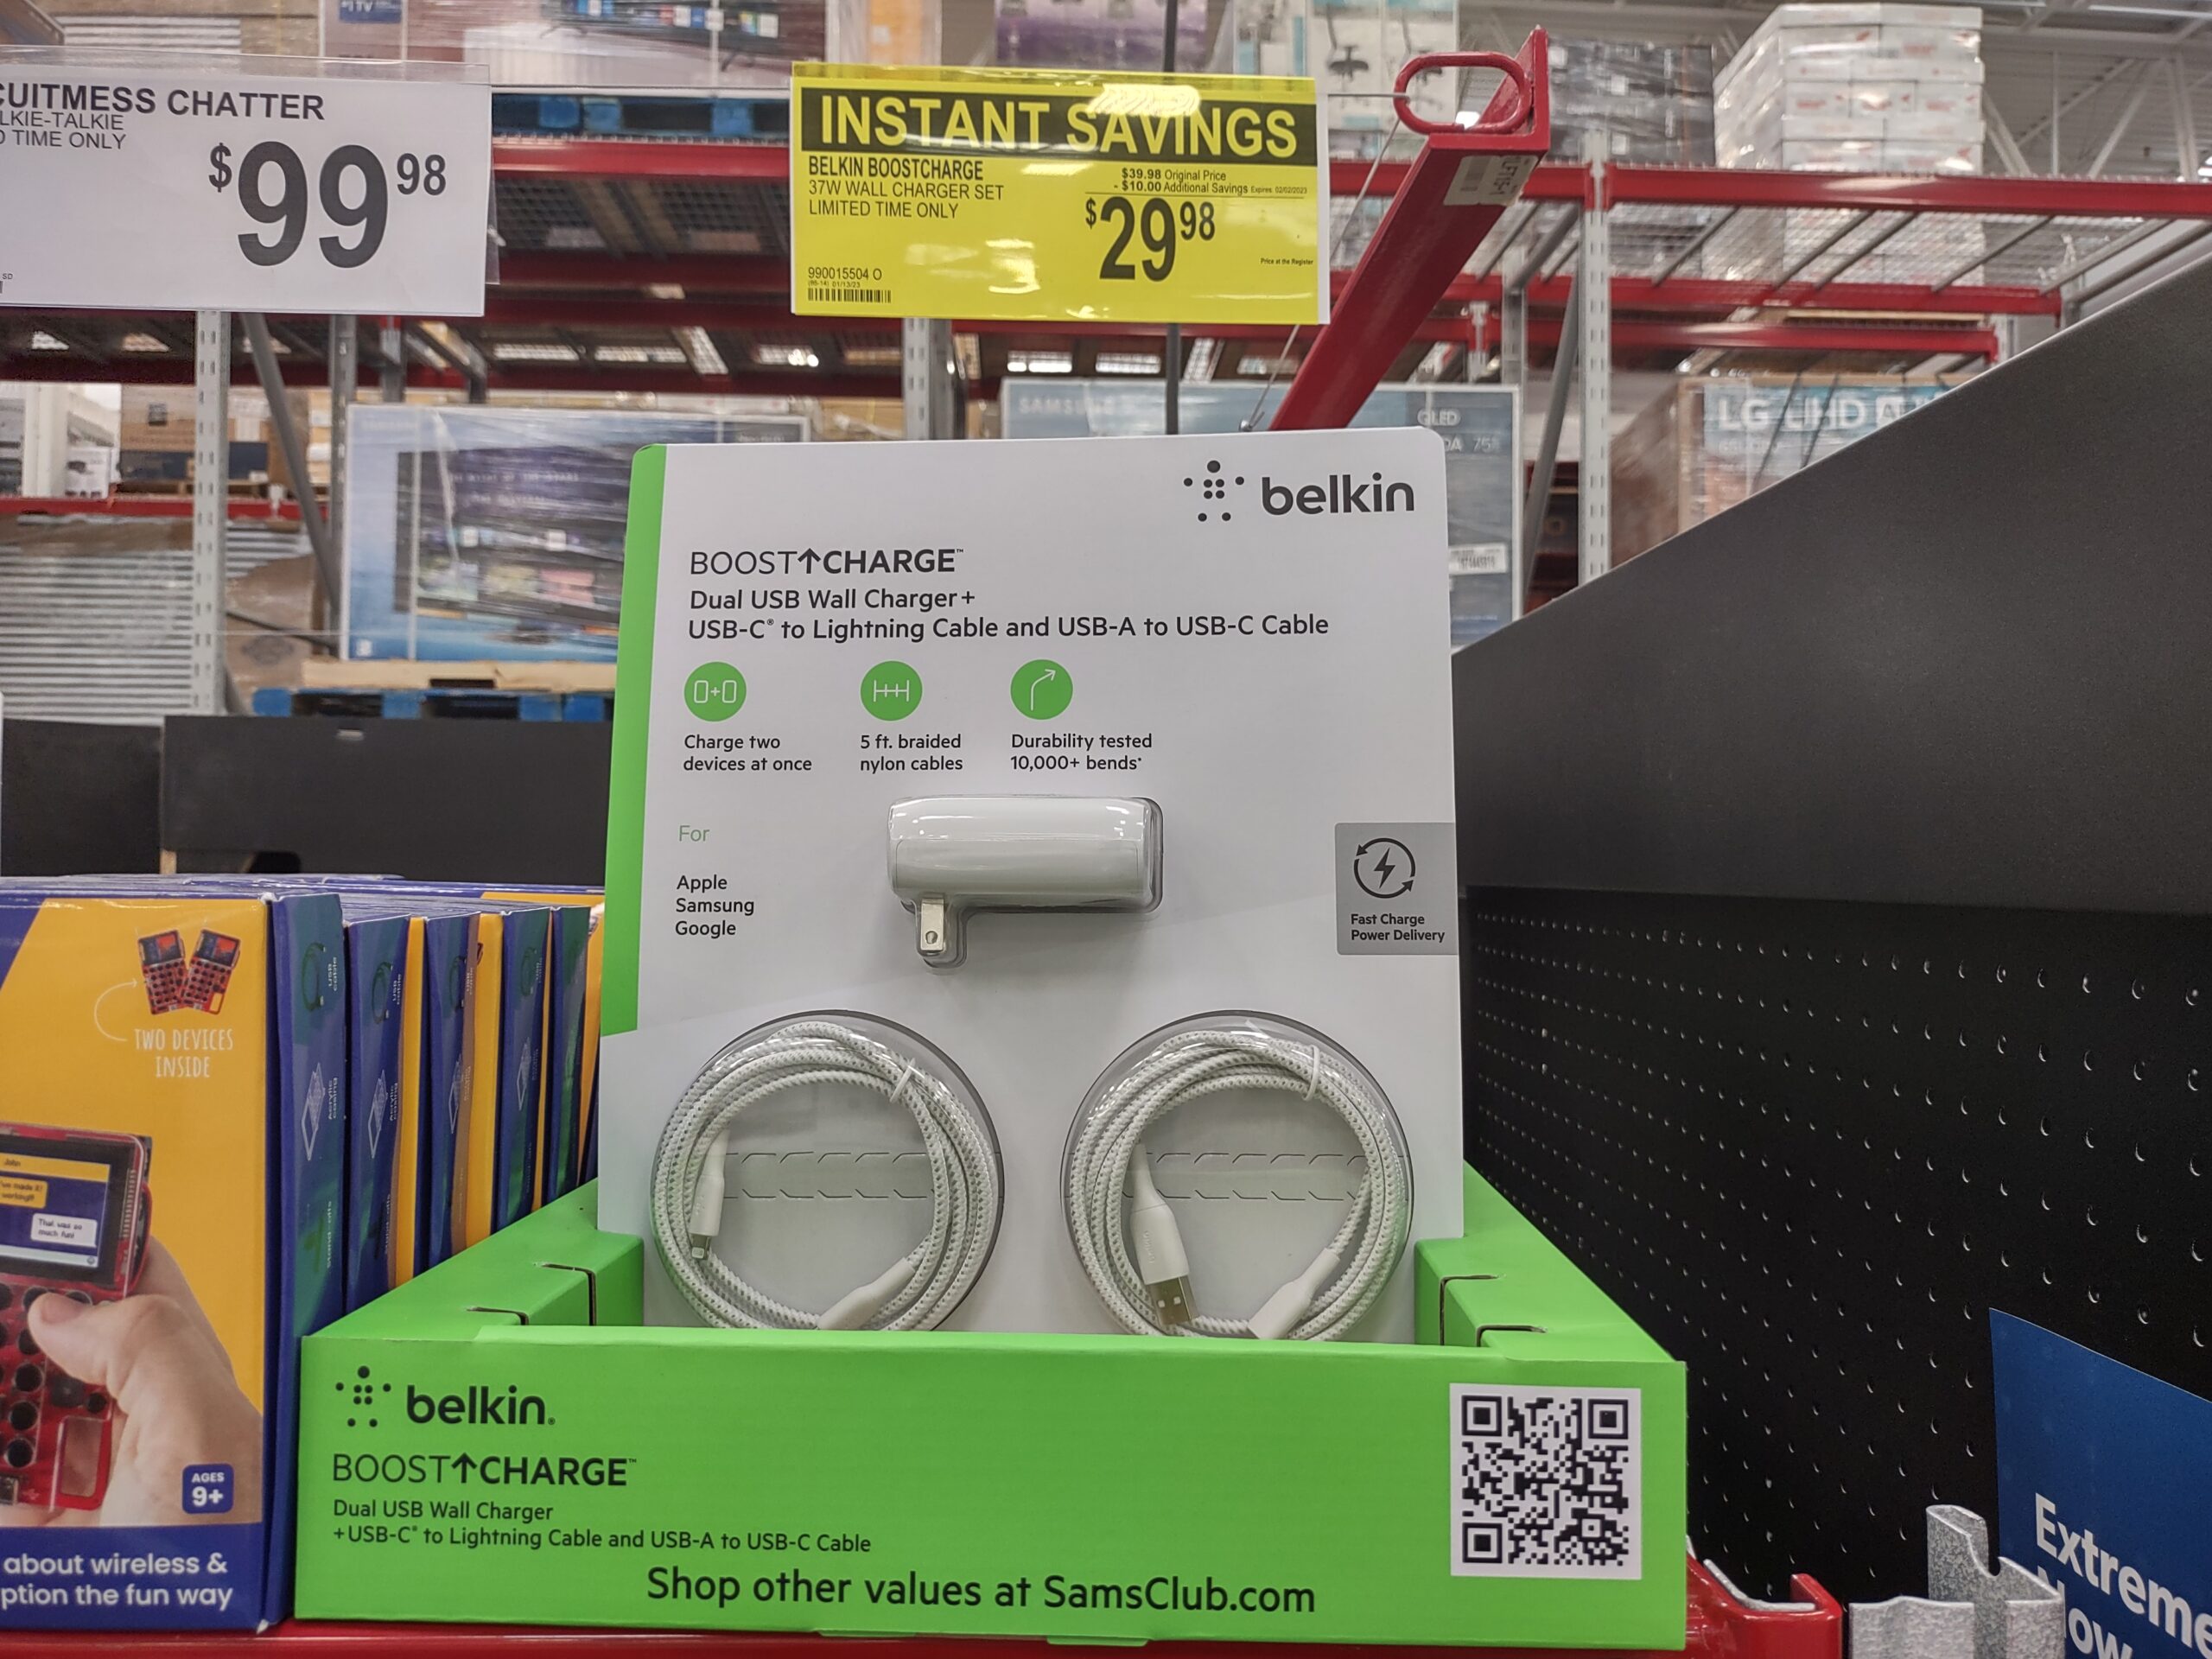 Belkin Dual USB Wall Charger Set $29.98 at Sam’s